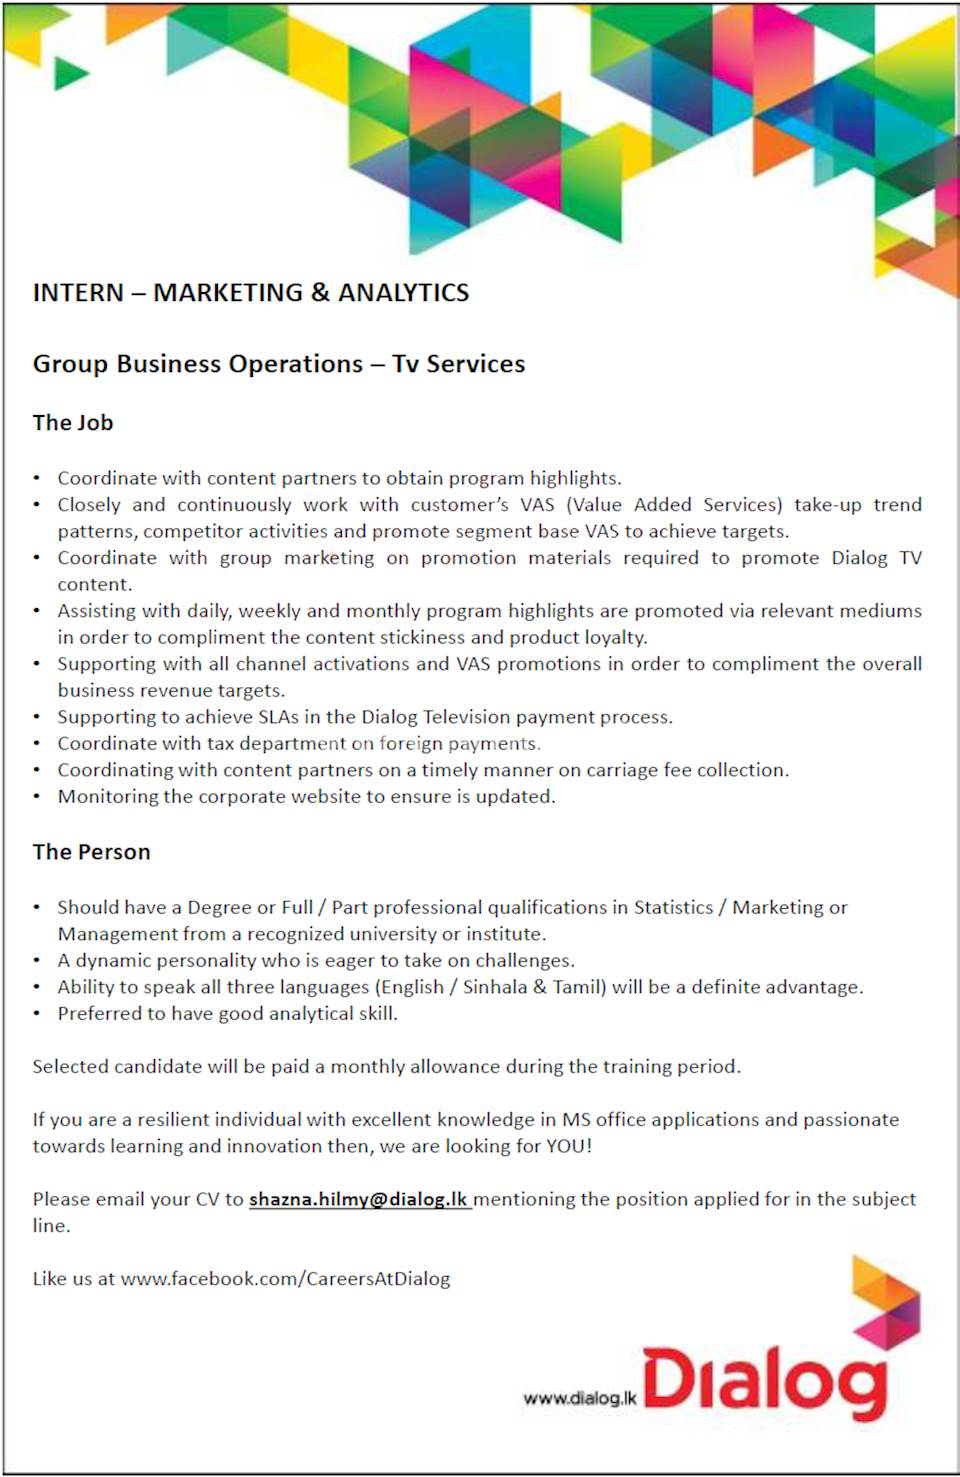 Intern - Marketing & Analytics